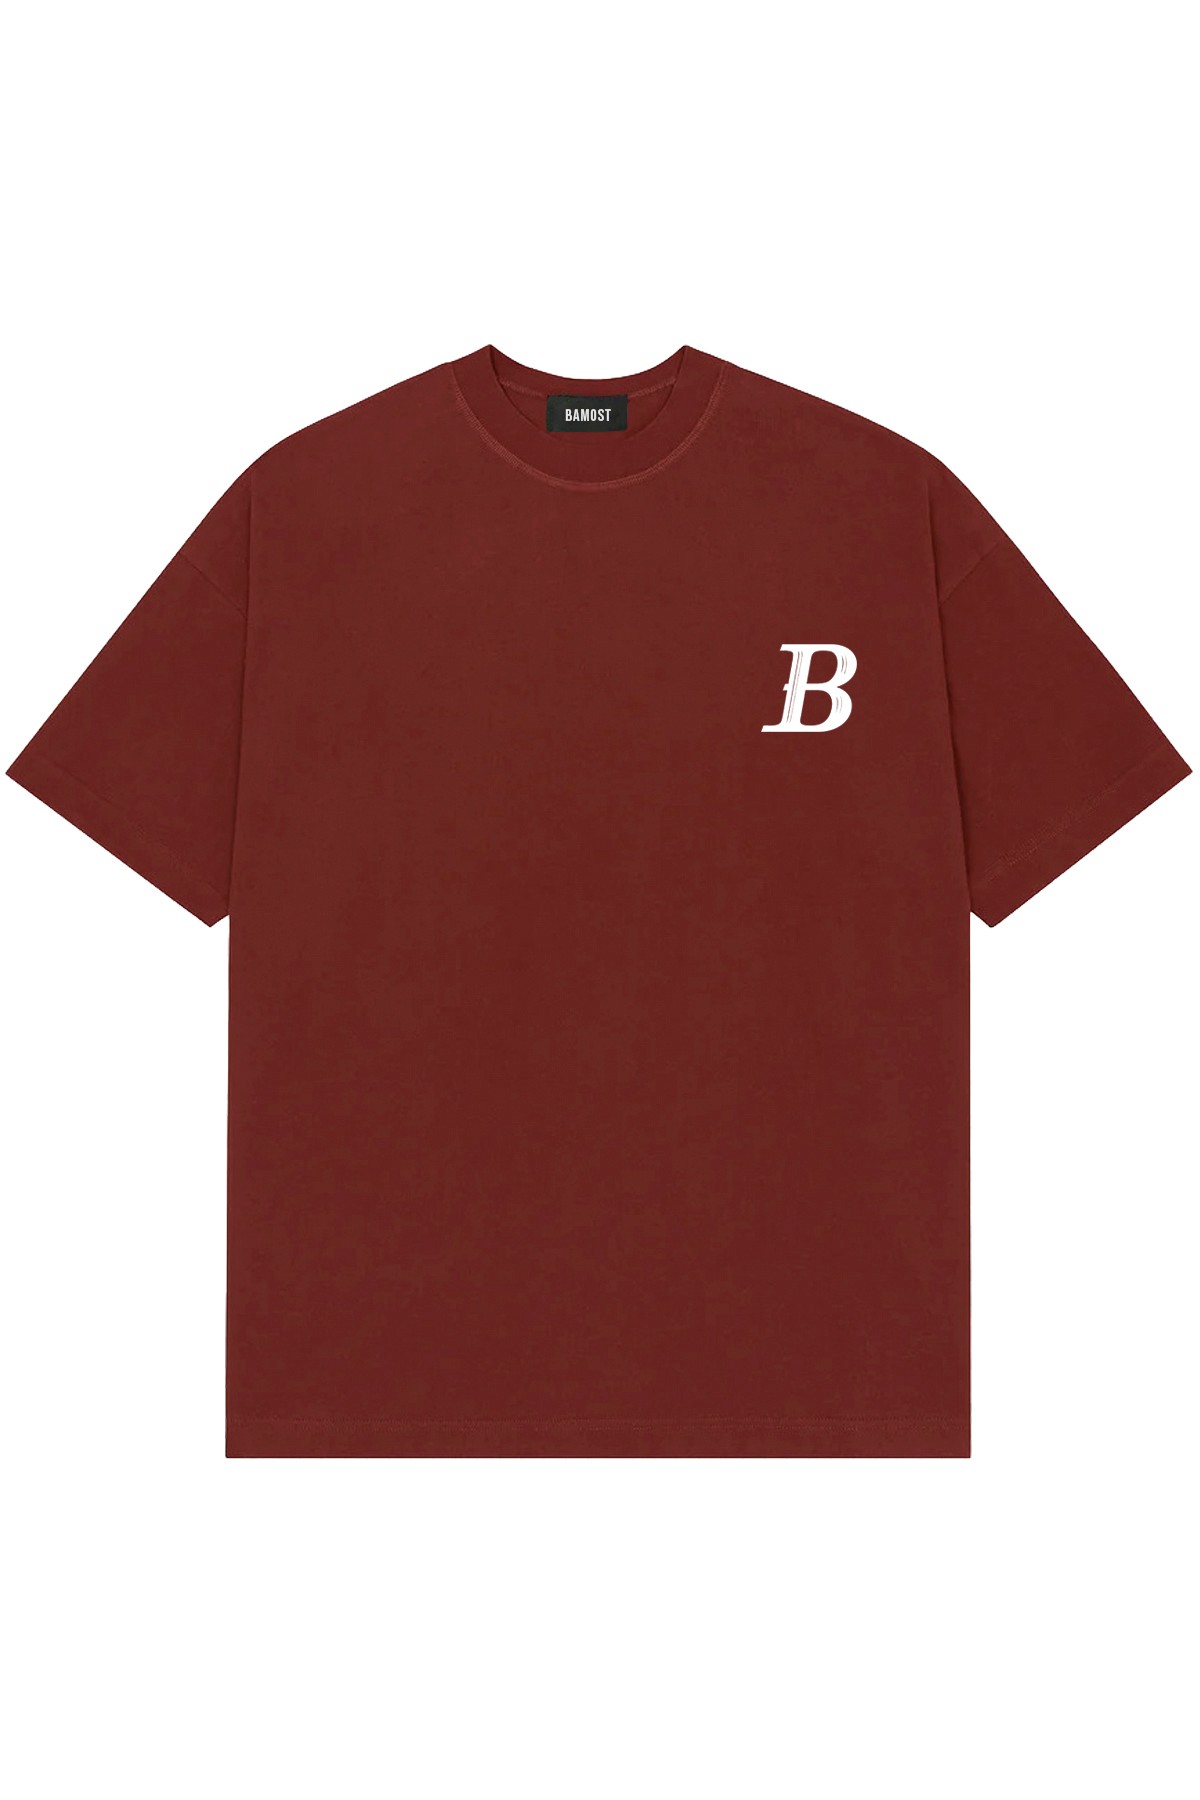 C Club - Comfort T-Shirt - BURGUNDY